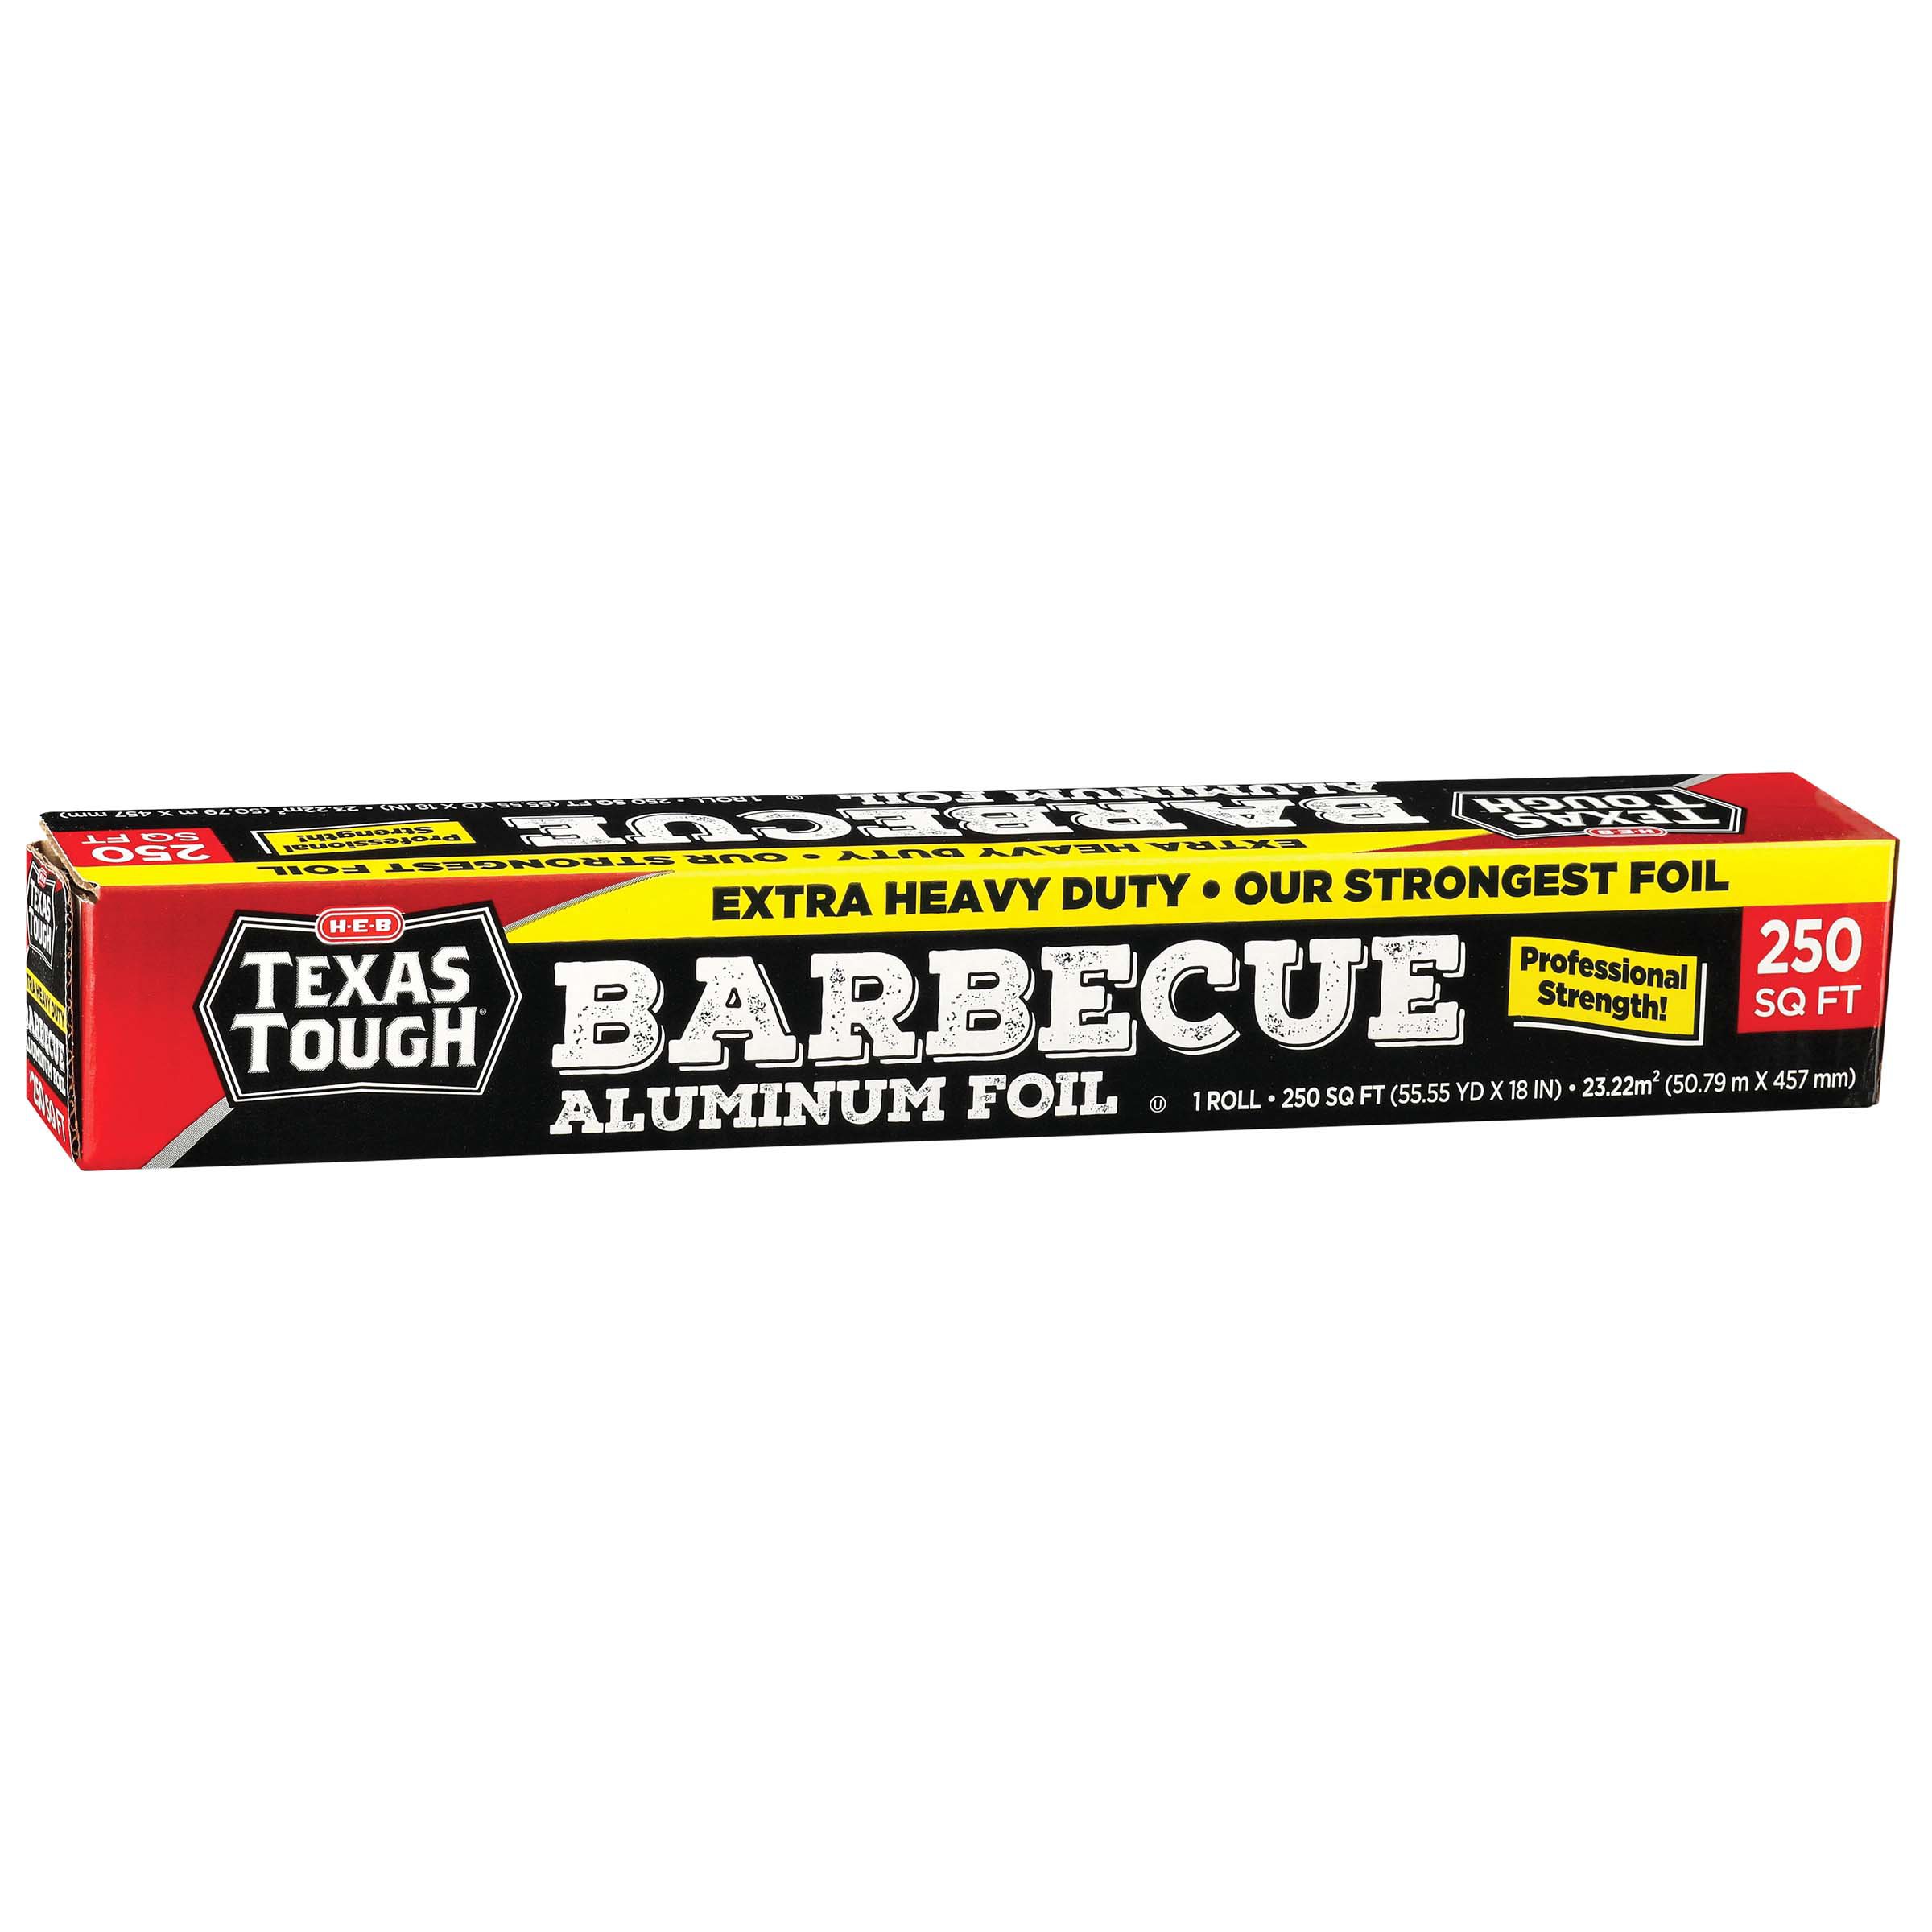 H-E-B Texas Tough Extra Heavy Duty Barbecue Aluminum Foil